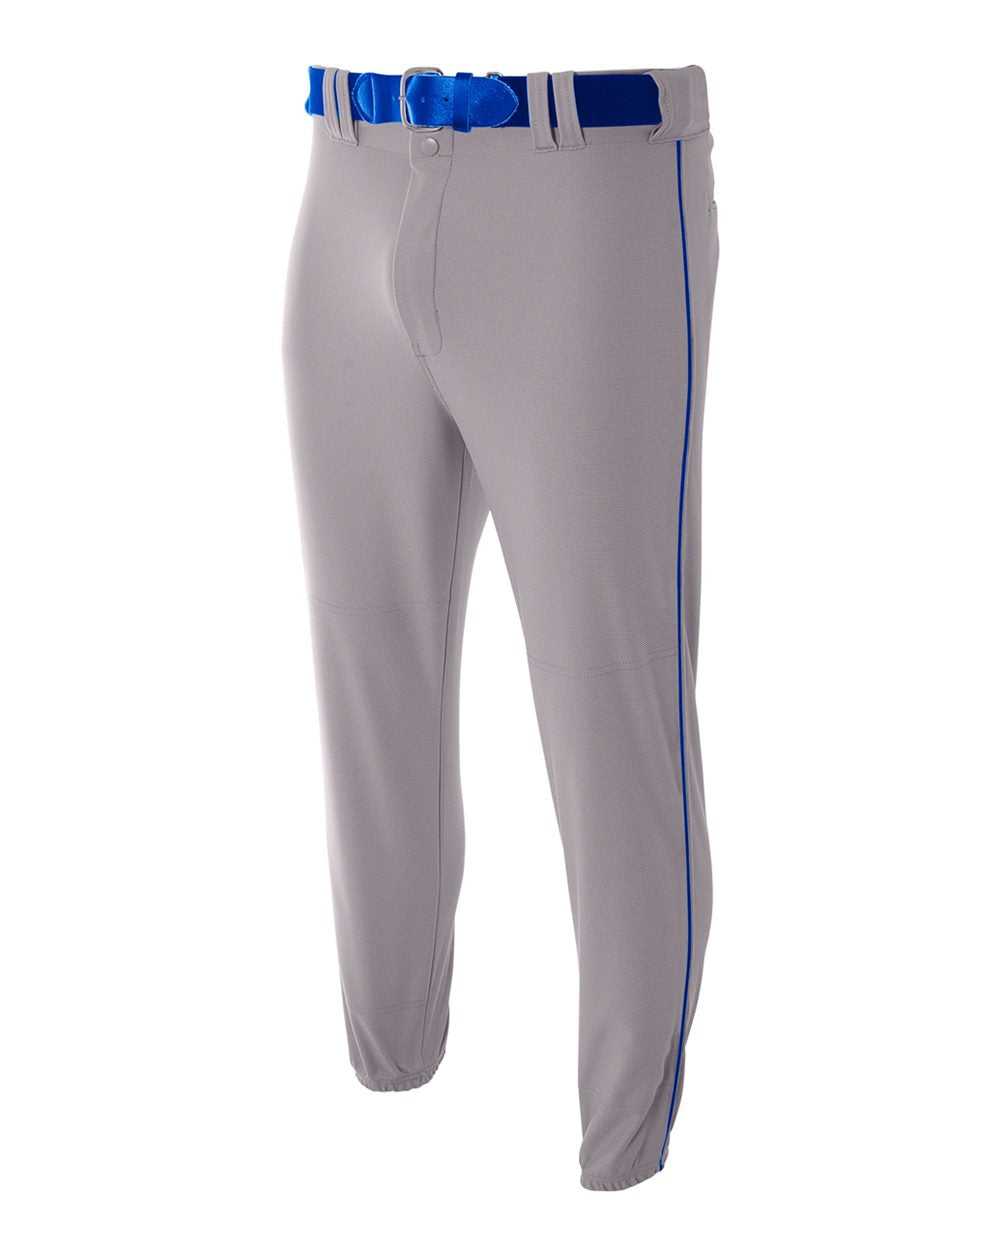 A4 NB6178 Youth Pro Style Elastic Bottom Baseball Pant - Gray Royal - HIT a Double